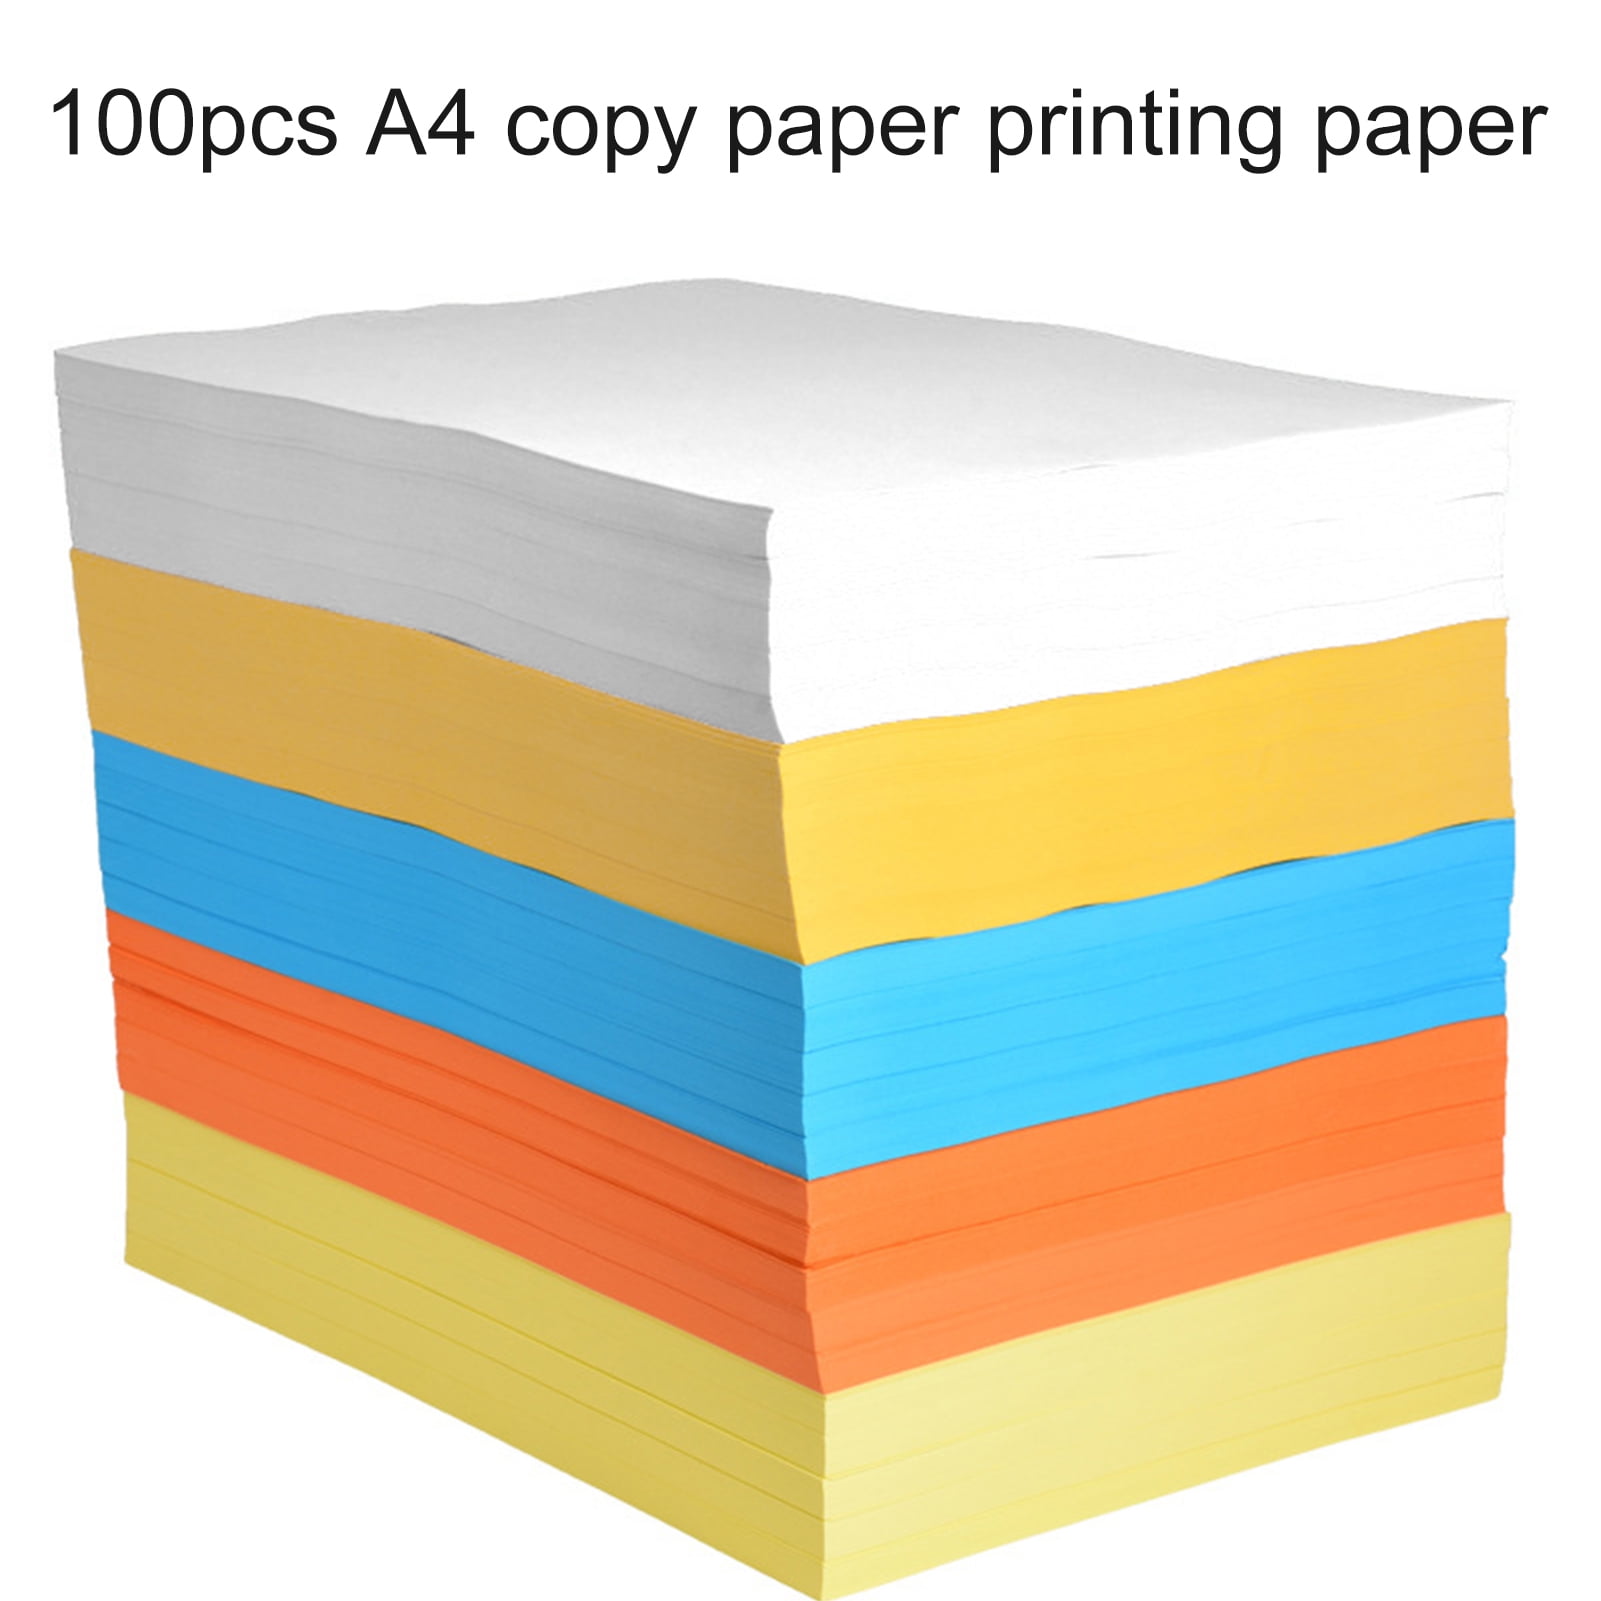  Nuburi - A5 Size Premium Printer Paper - Ideal for